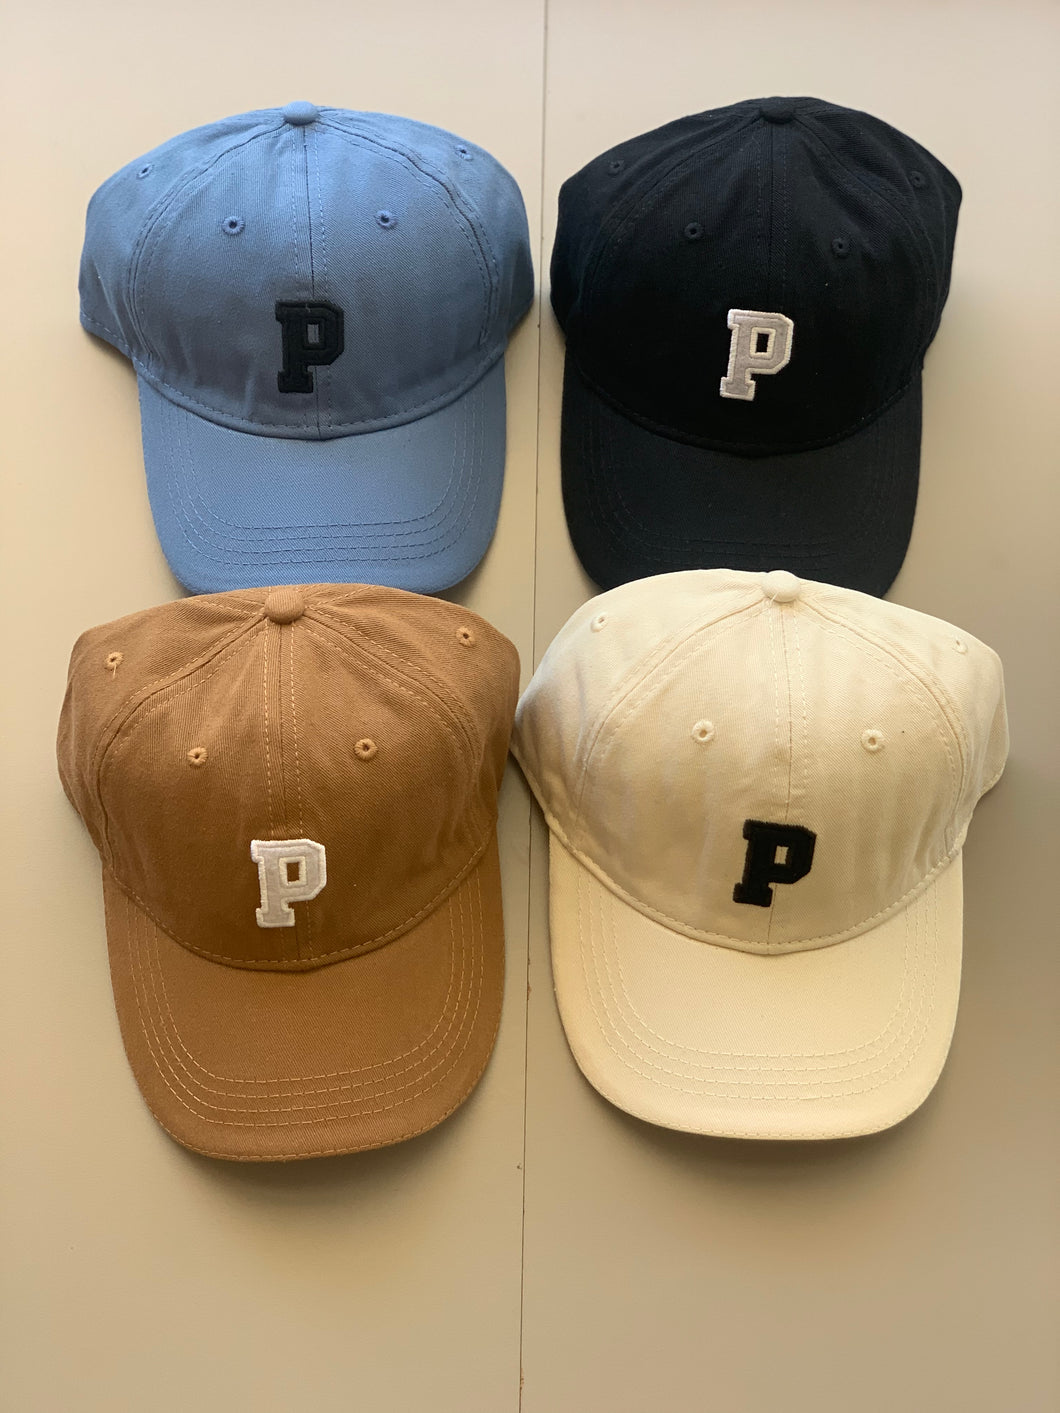 P Hat 2-6 years